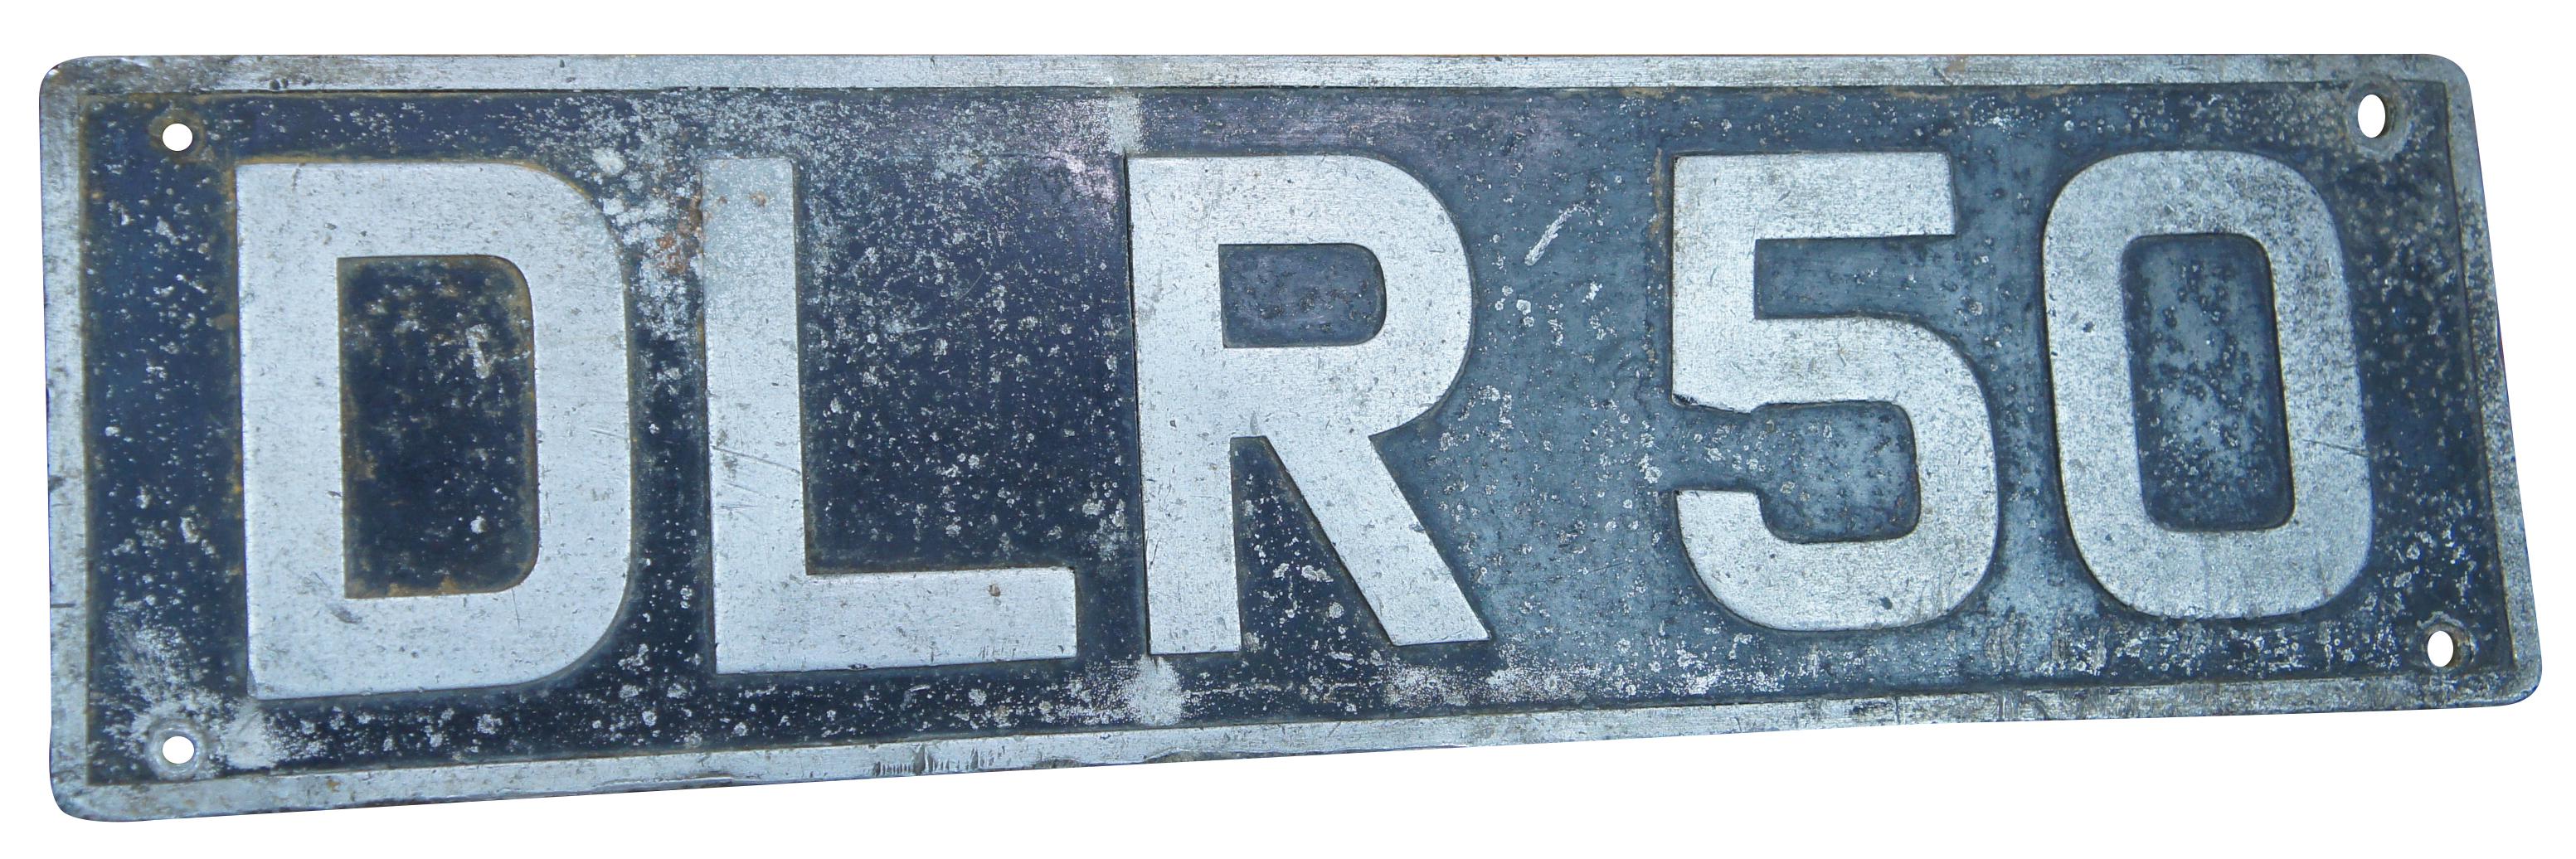 dlr license plate